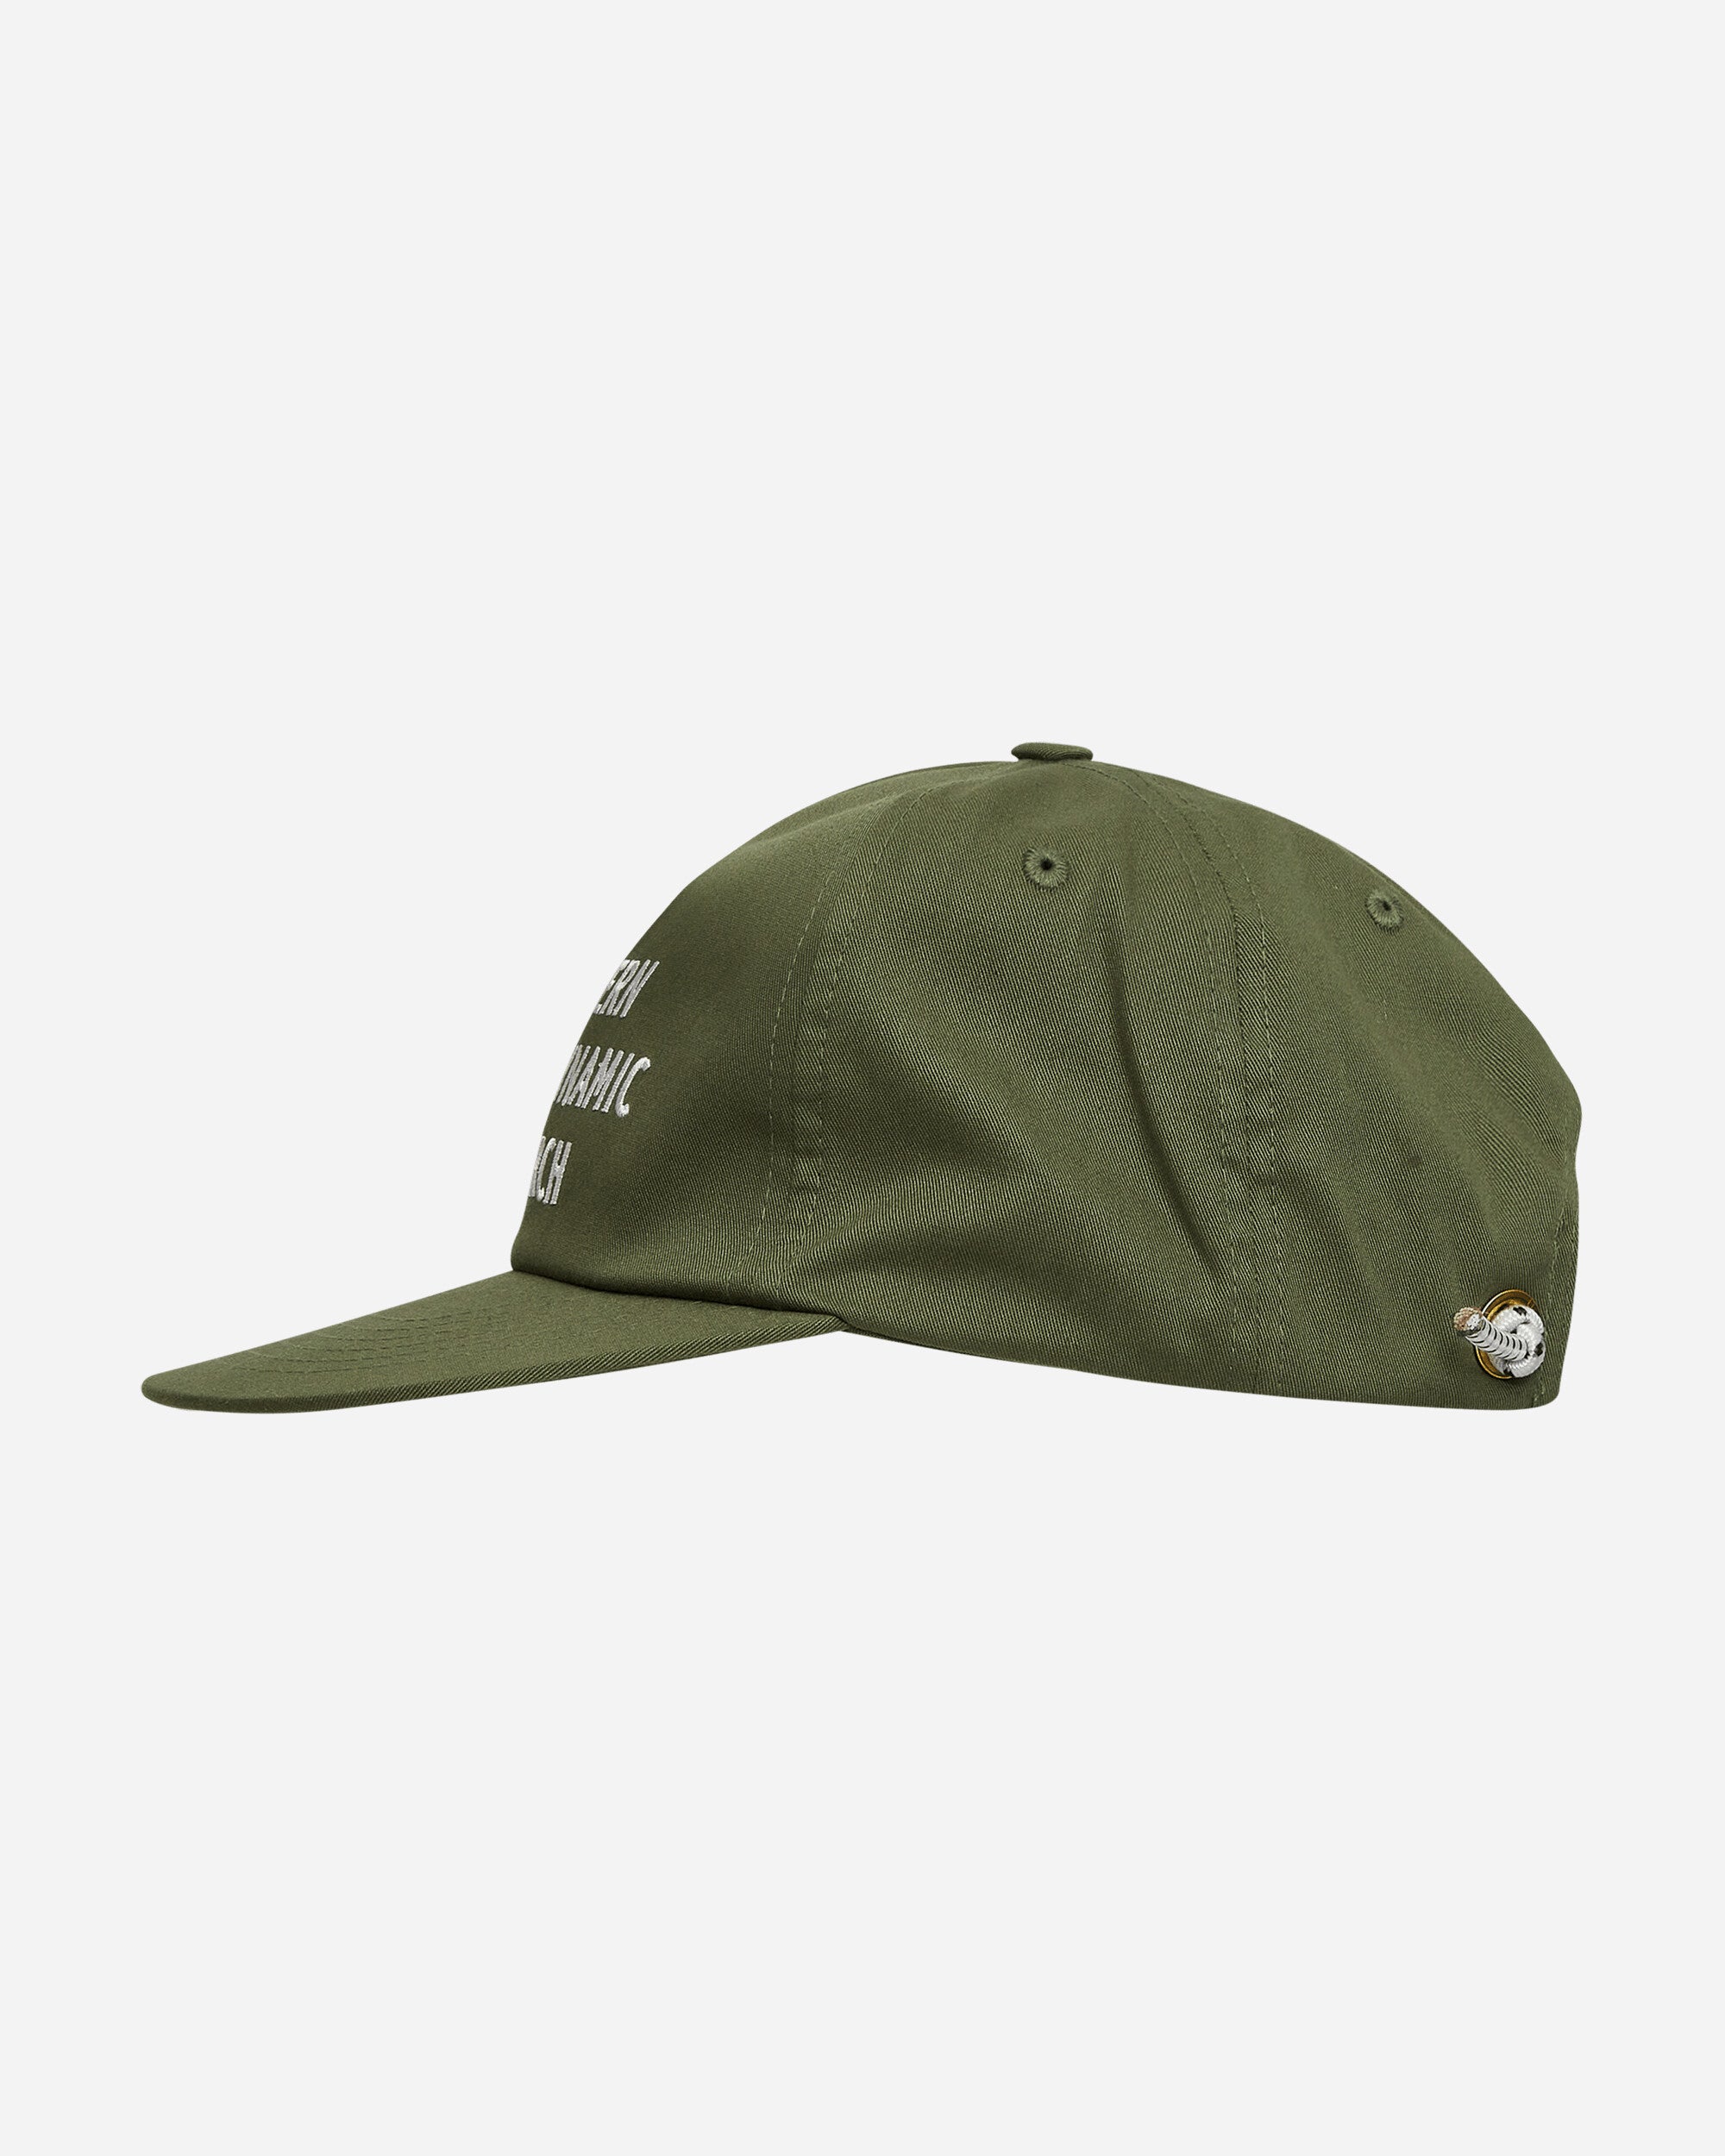 Promotional Hat Green Olive